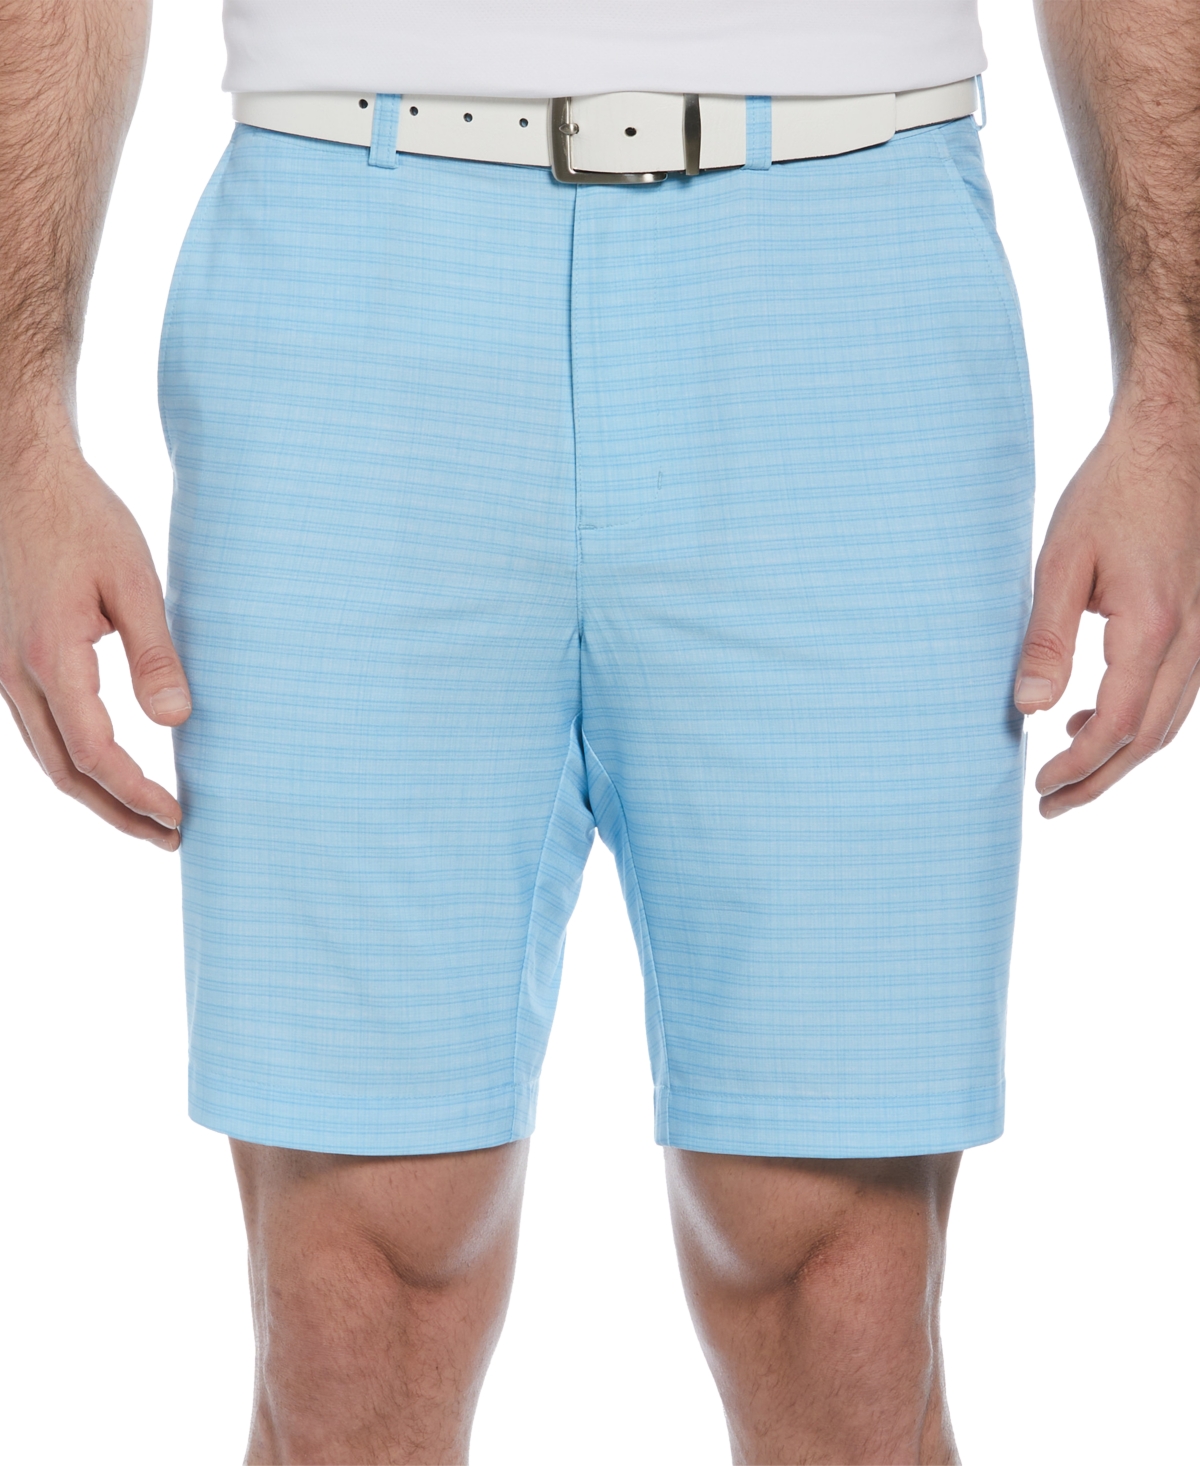 Men's Striped 8" Golf Shorts - Shell Pink